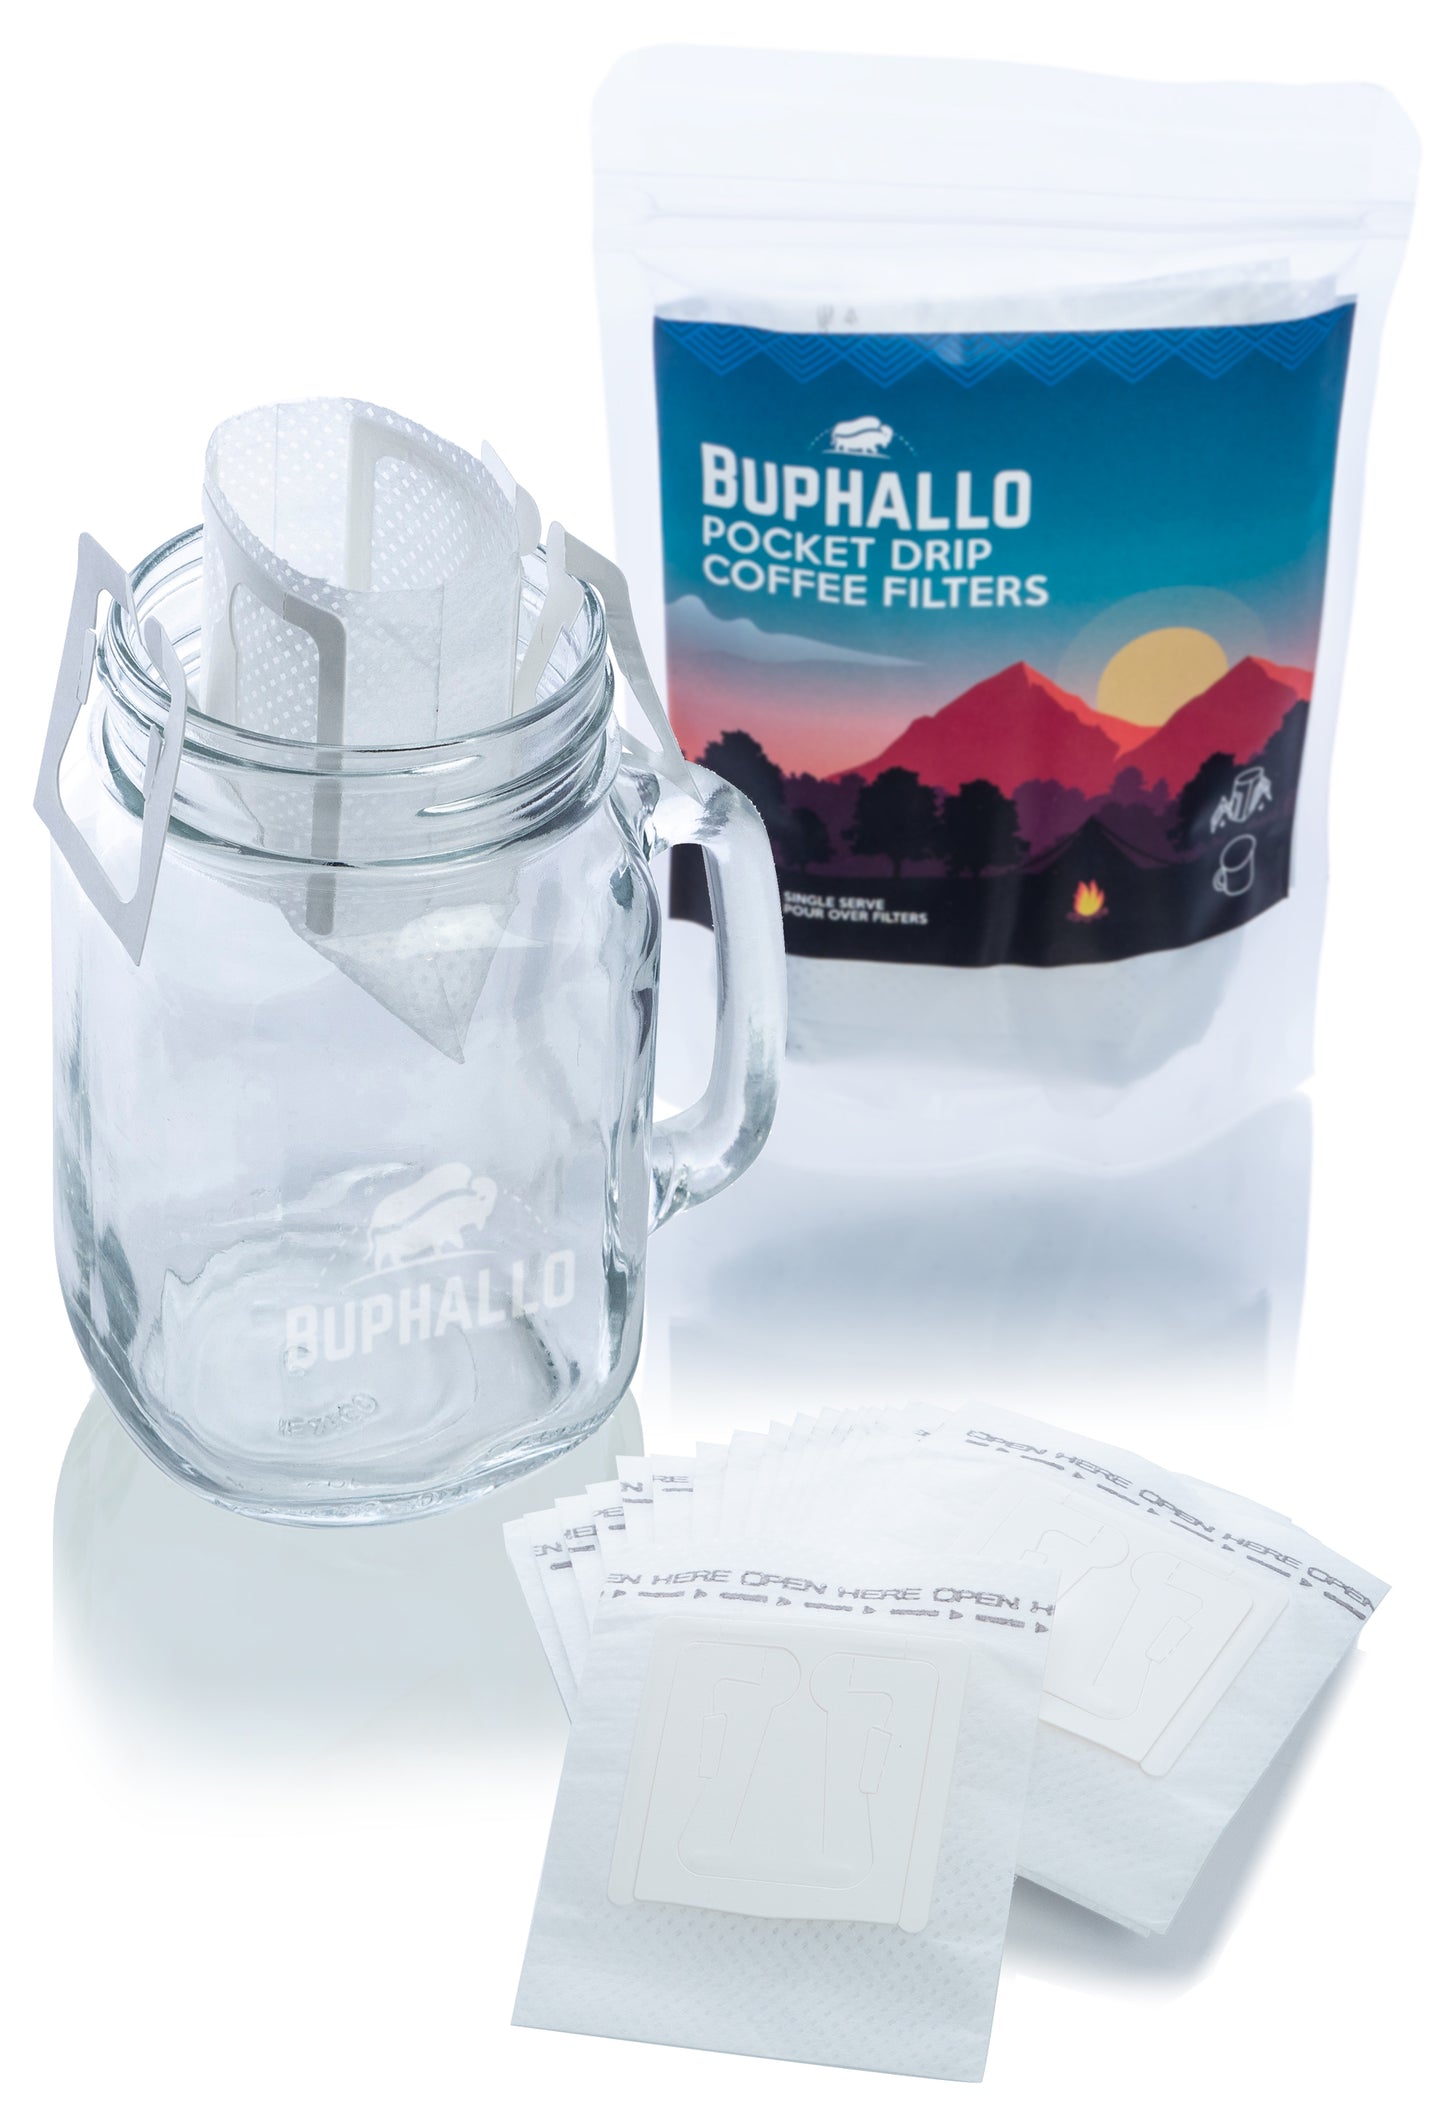 Pocket Drip Coffee Filters 50 pack